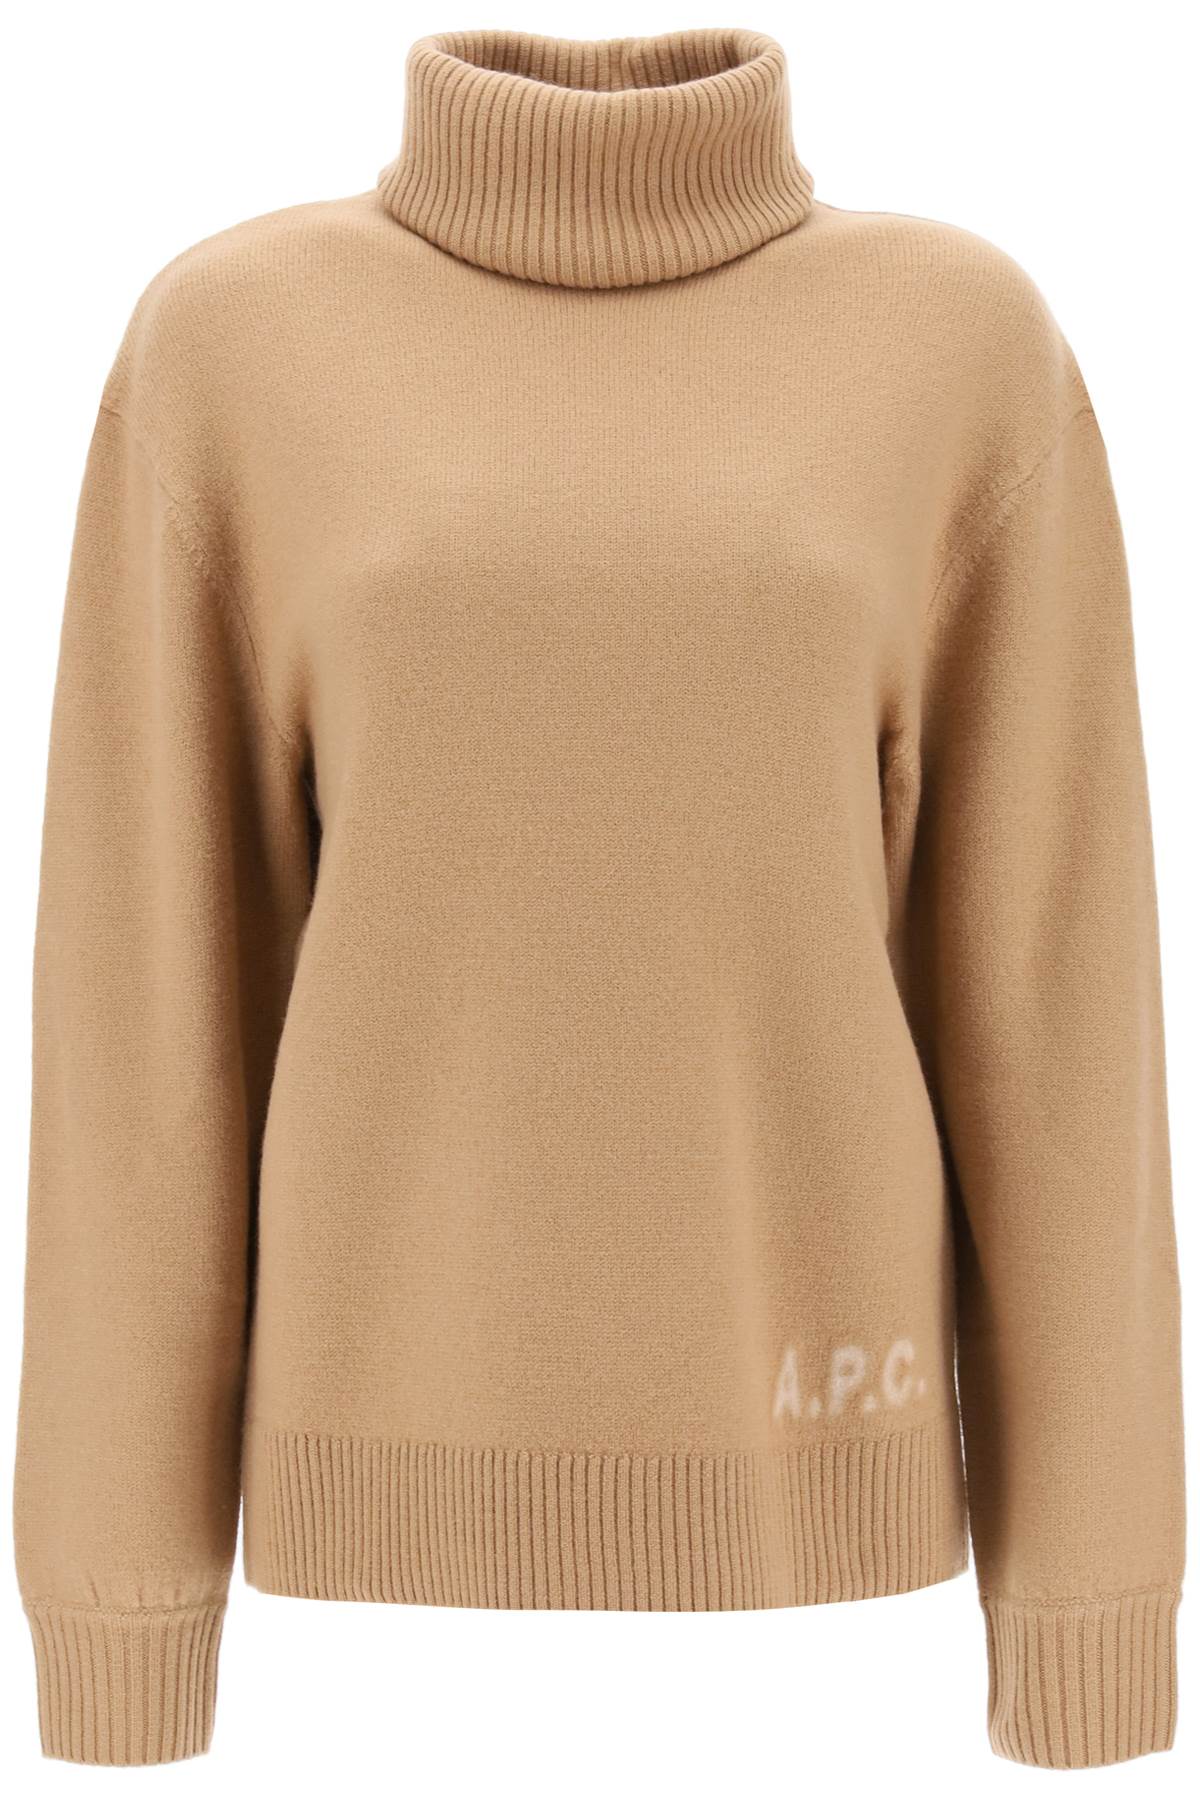 Apc Walter Virgin Wool Turtleneck Sweater In Tcb Camel/ Ecru